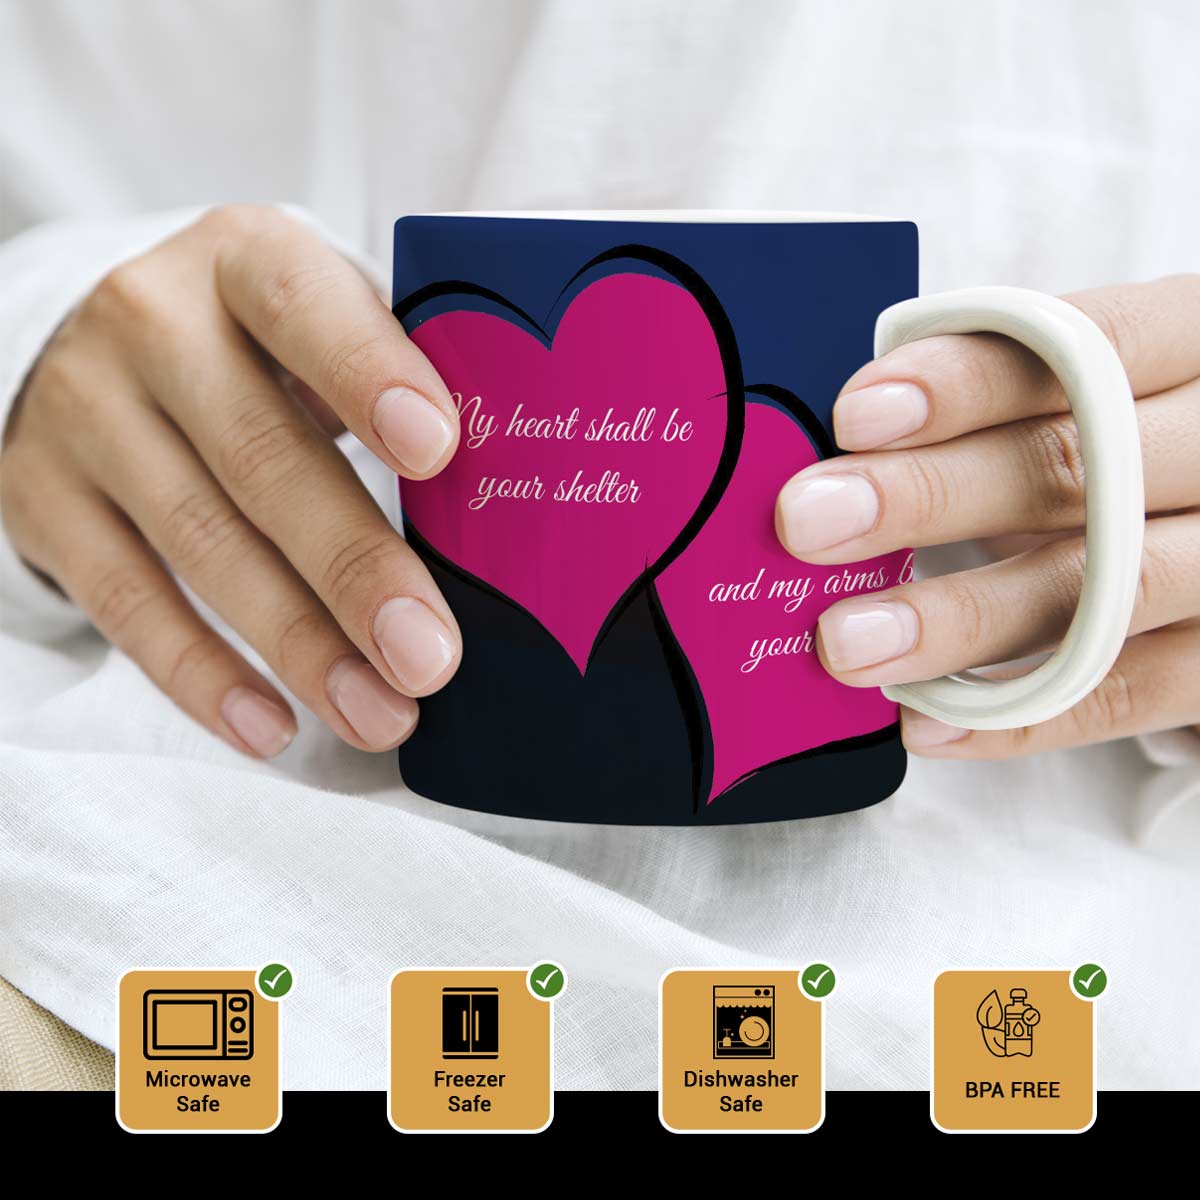 alwaysgift Friendship & Love Promise Day Greeting Card Greeting Card Price  in India - Buy alwaysgift Friendship & Love Promise Day Greeting Card  Greeting Card online at Flipkart.com